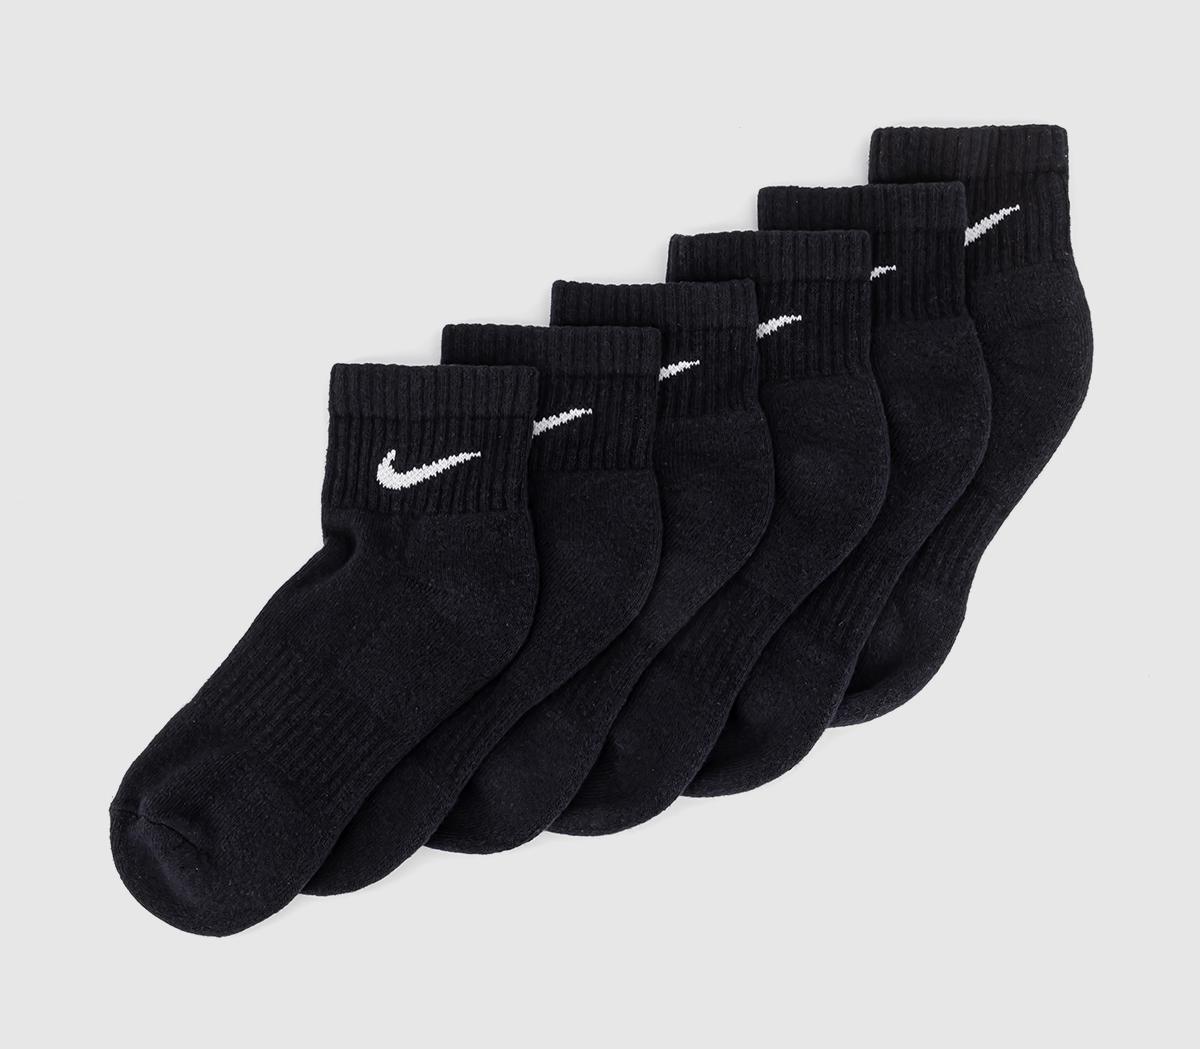 NikeTraining Ankle Socks 6 PairsBlack White